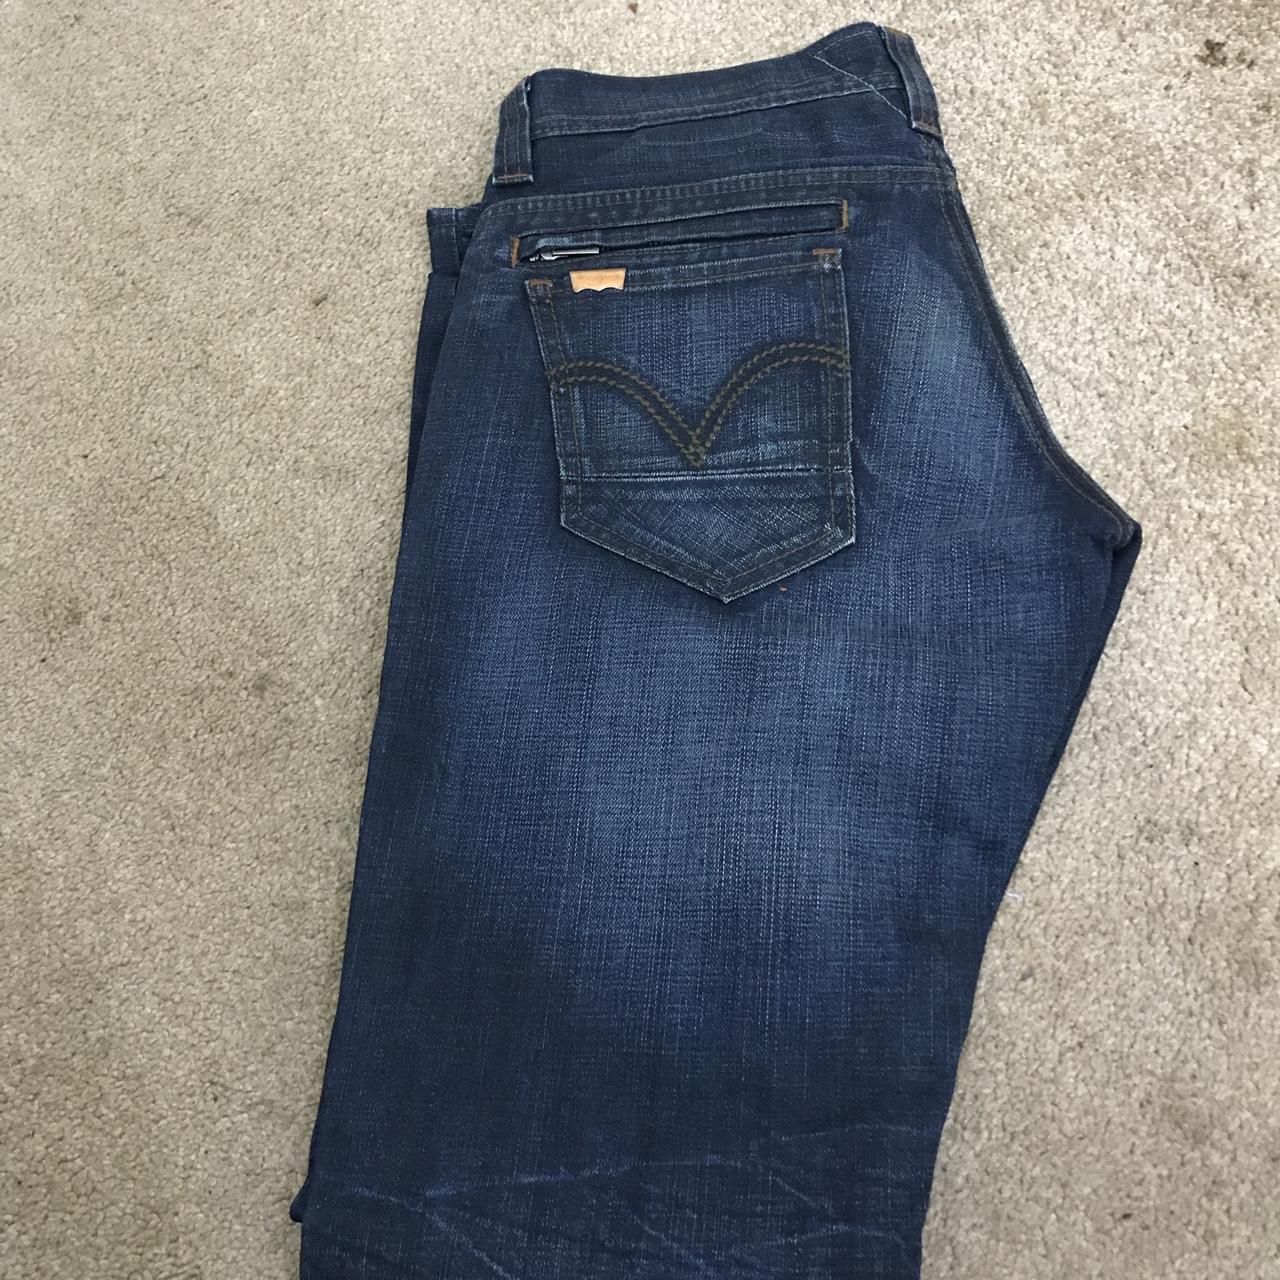 Levi's Skinny 511 jeans worn twice #Levis #Vintage... - Depop